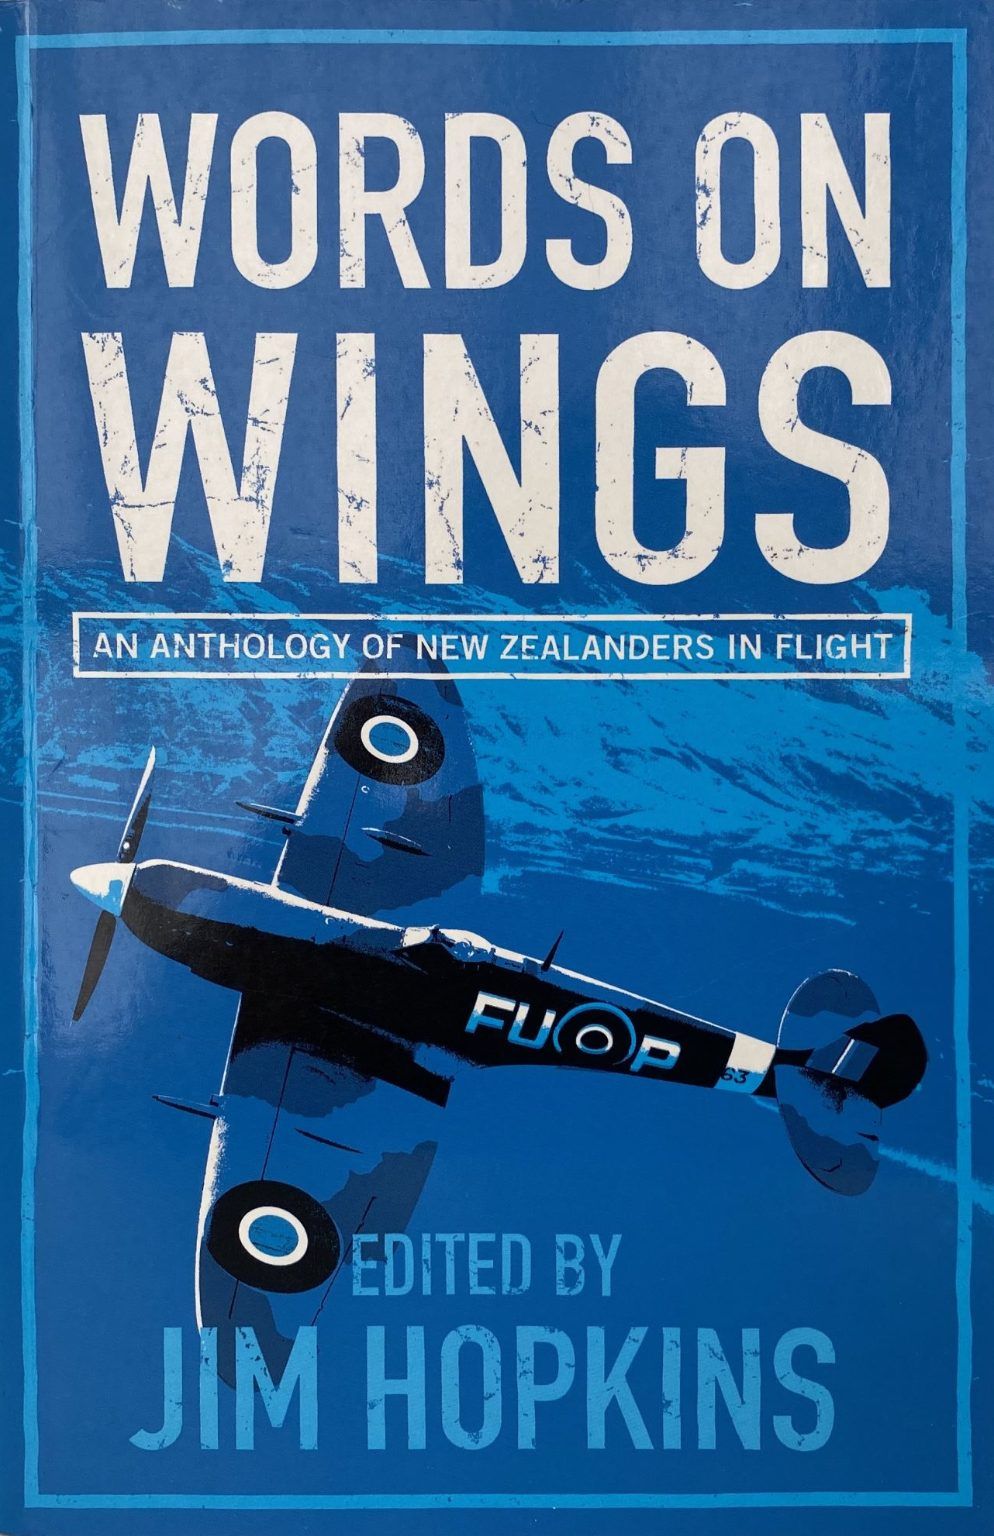 WORDS ON WINGS: An Anthology of New Zealanders in Flight